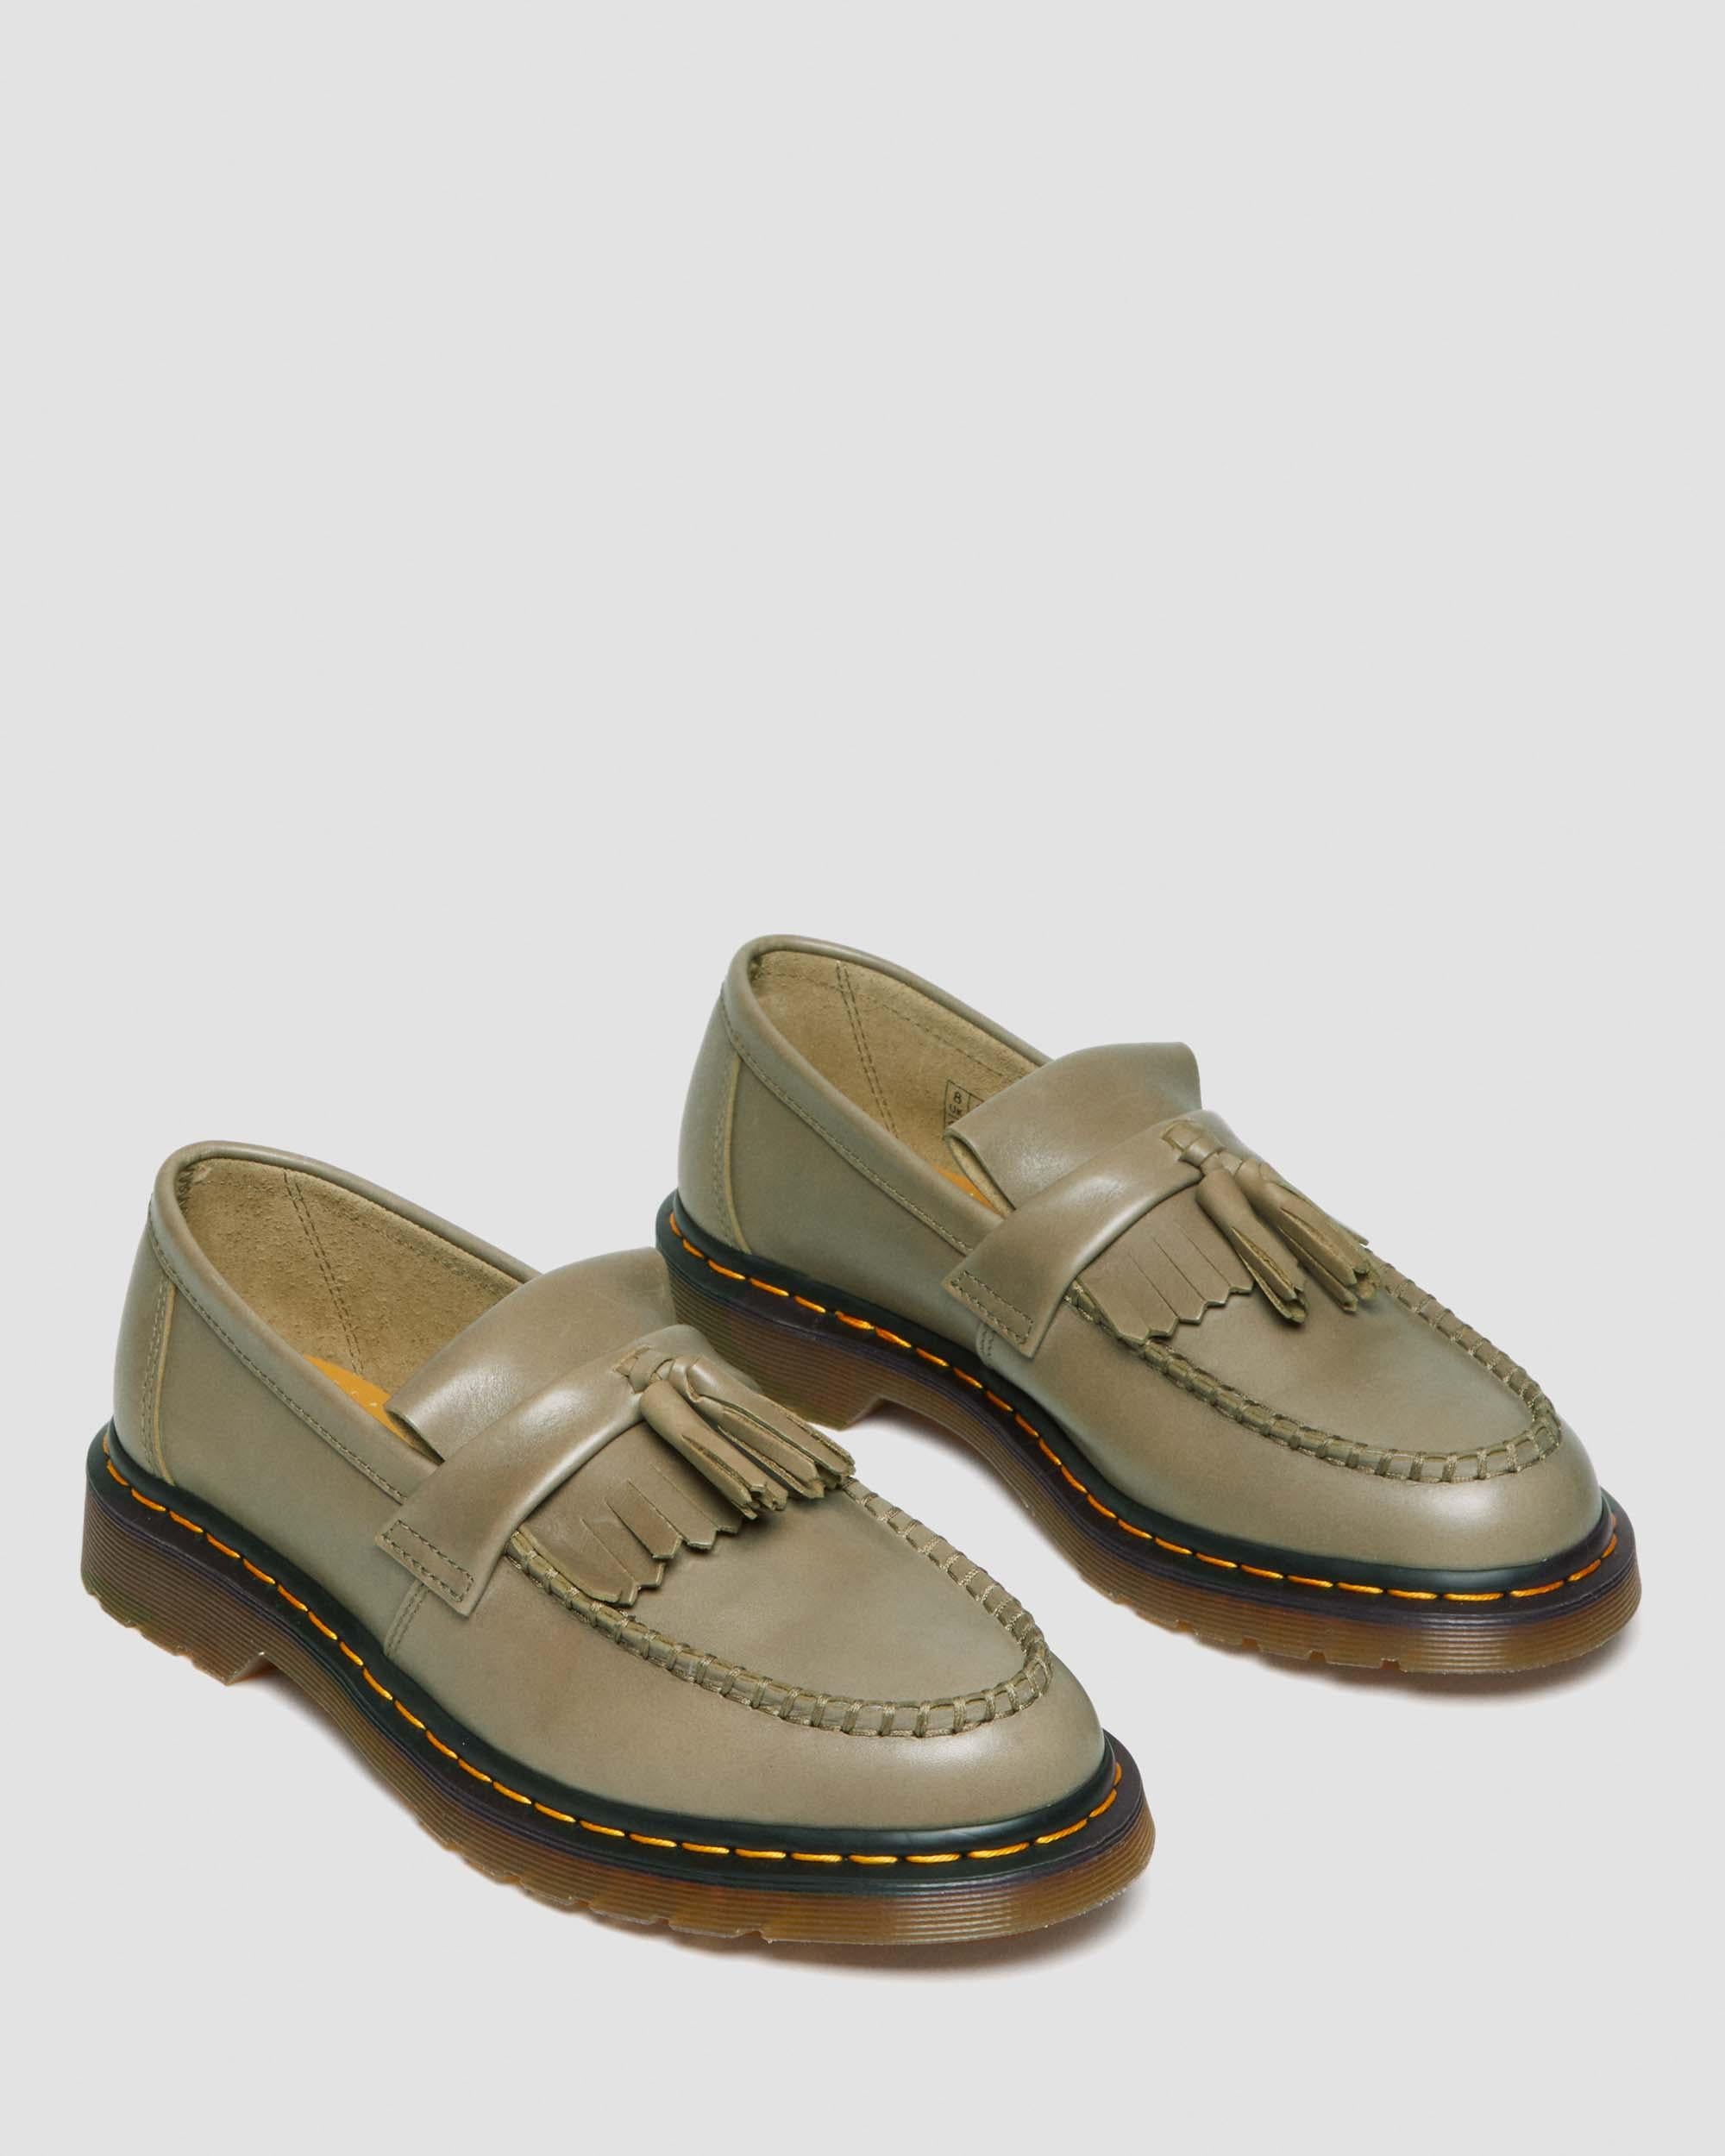 Adrian Yellow Stitch 黃色縫線 Carrara 皮鞋